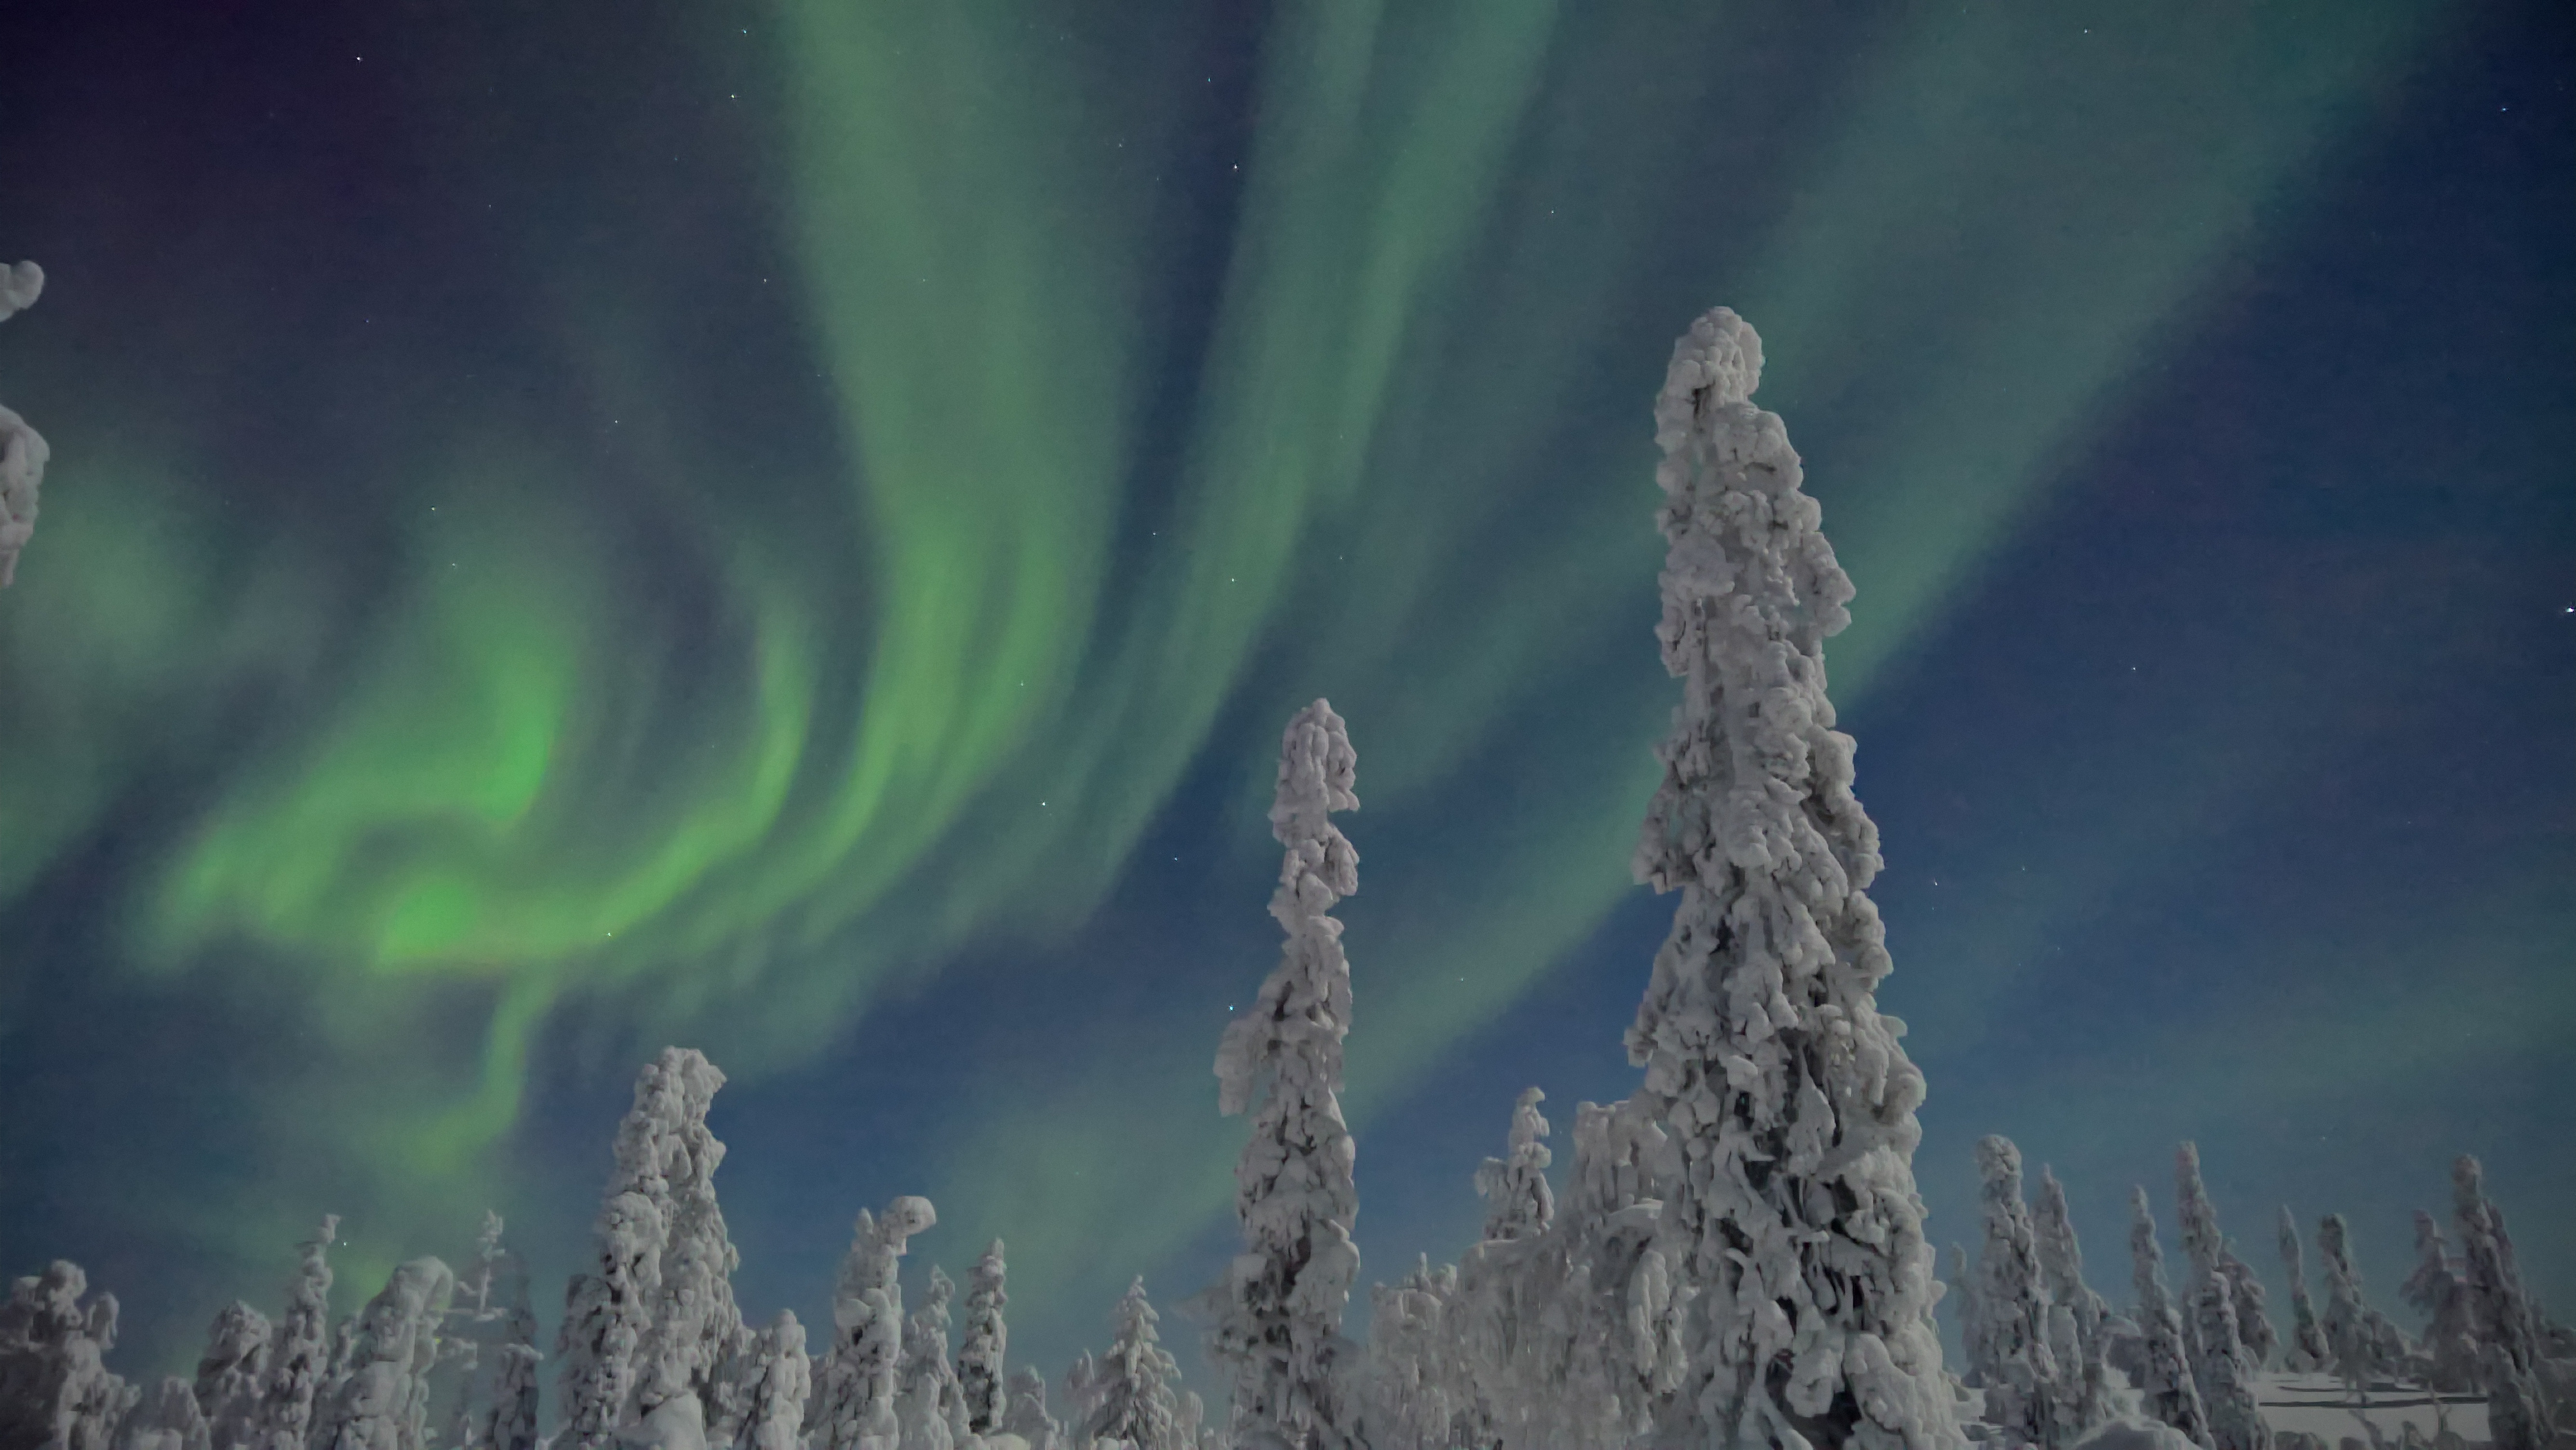 The Aurora Borealis dances in glowing green spirals above treetops near Levi, Finland. Shot with Lumia 950, by Stephen Alvarez.